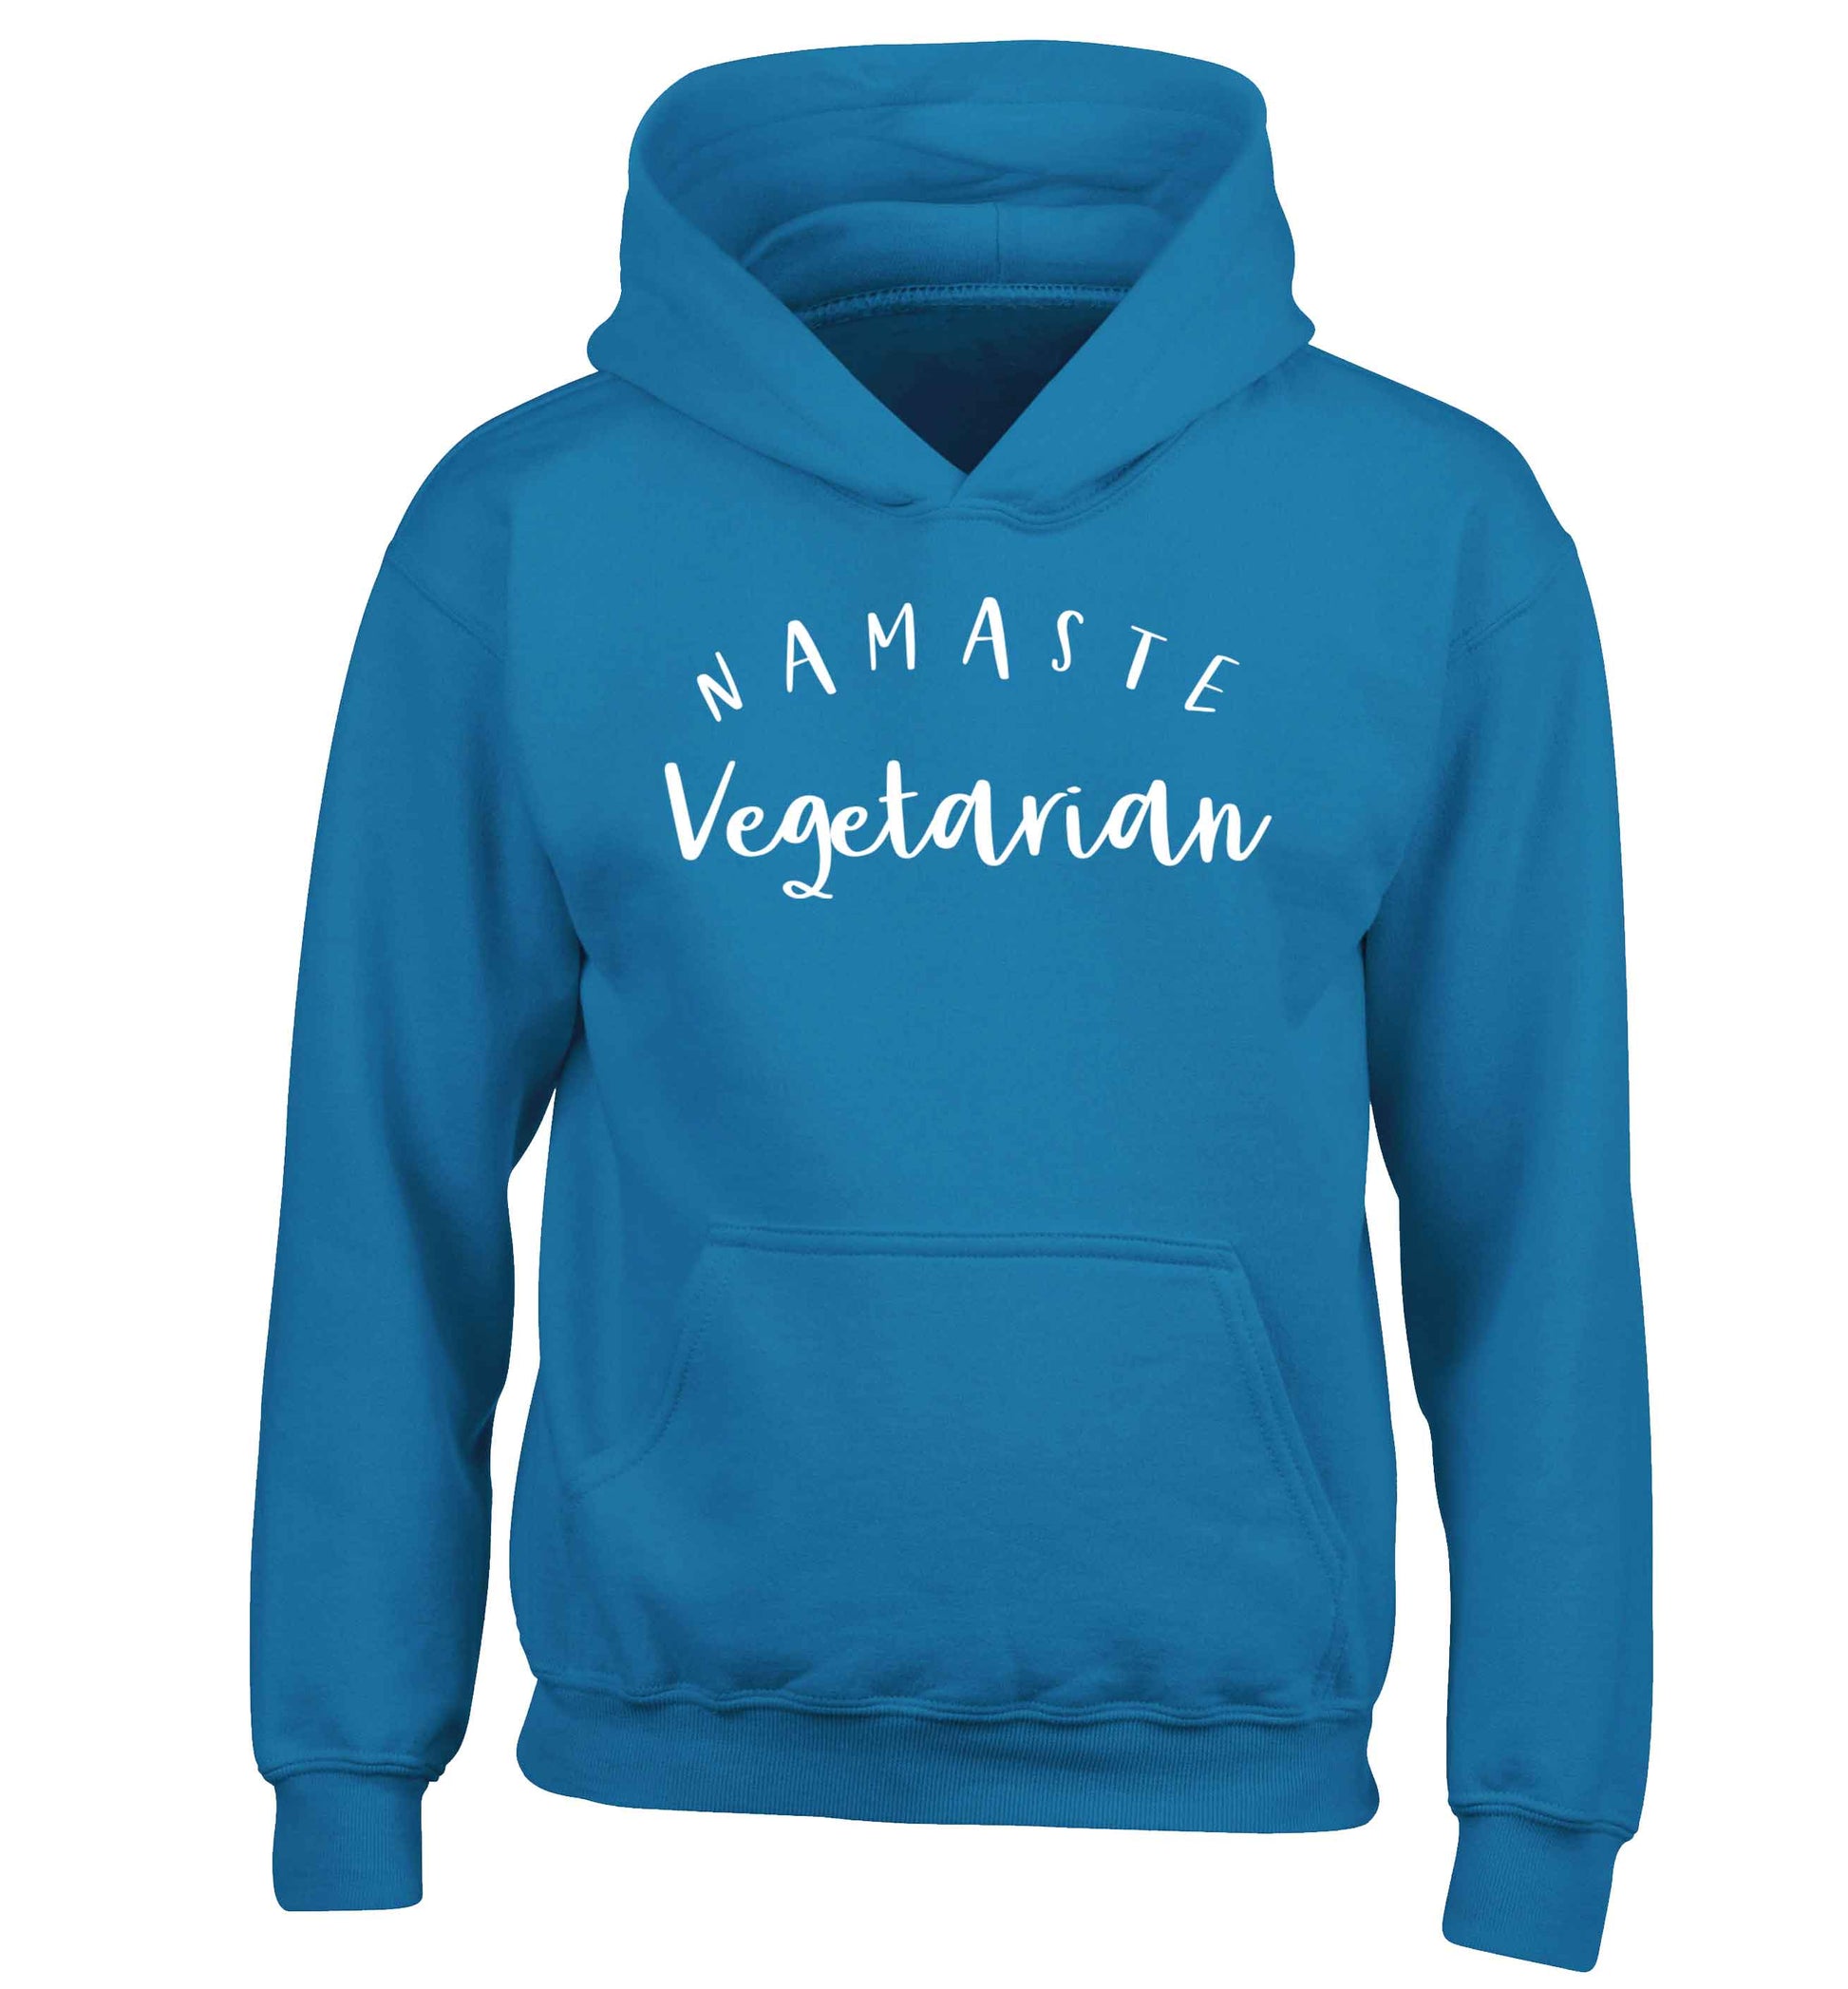 Namaste vegetarian children's blue hoodie 12-13 Years